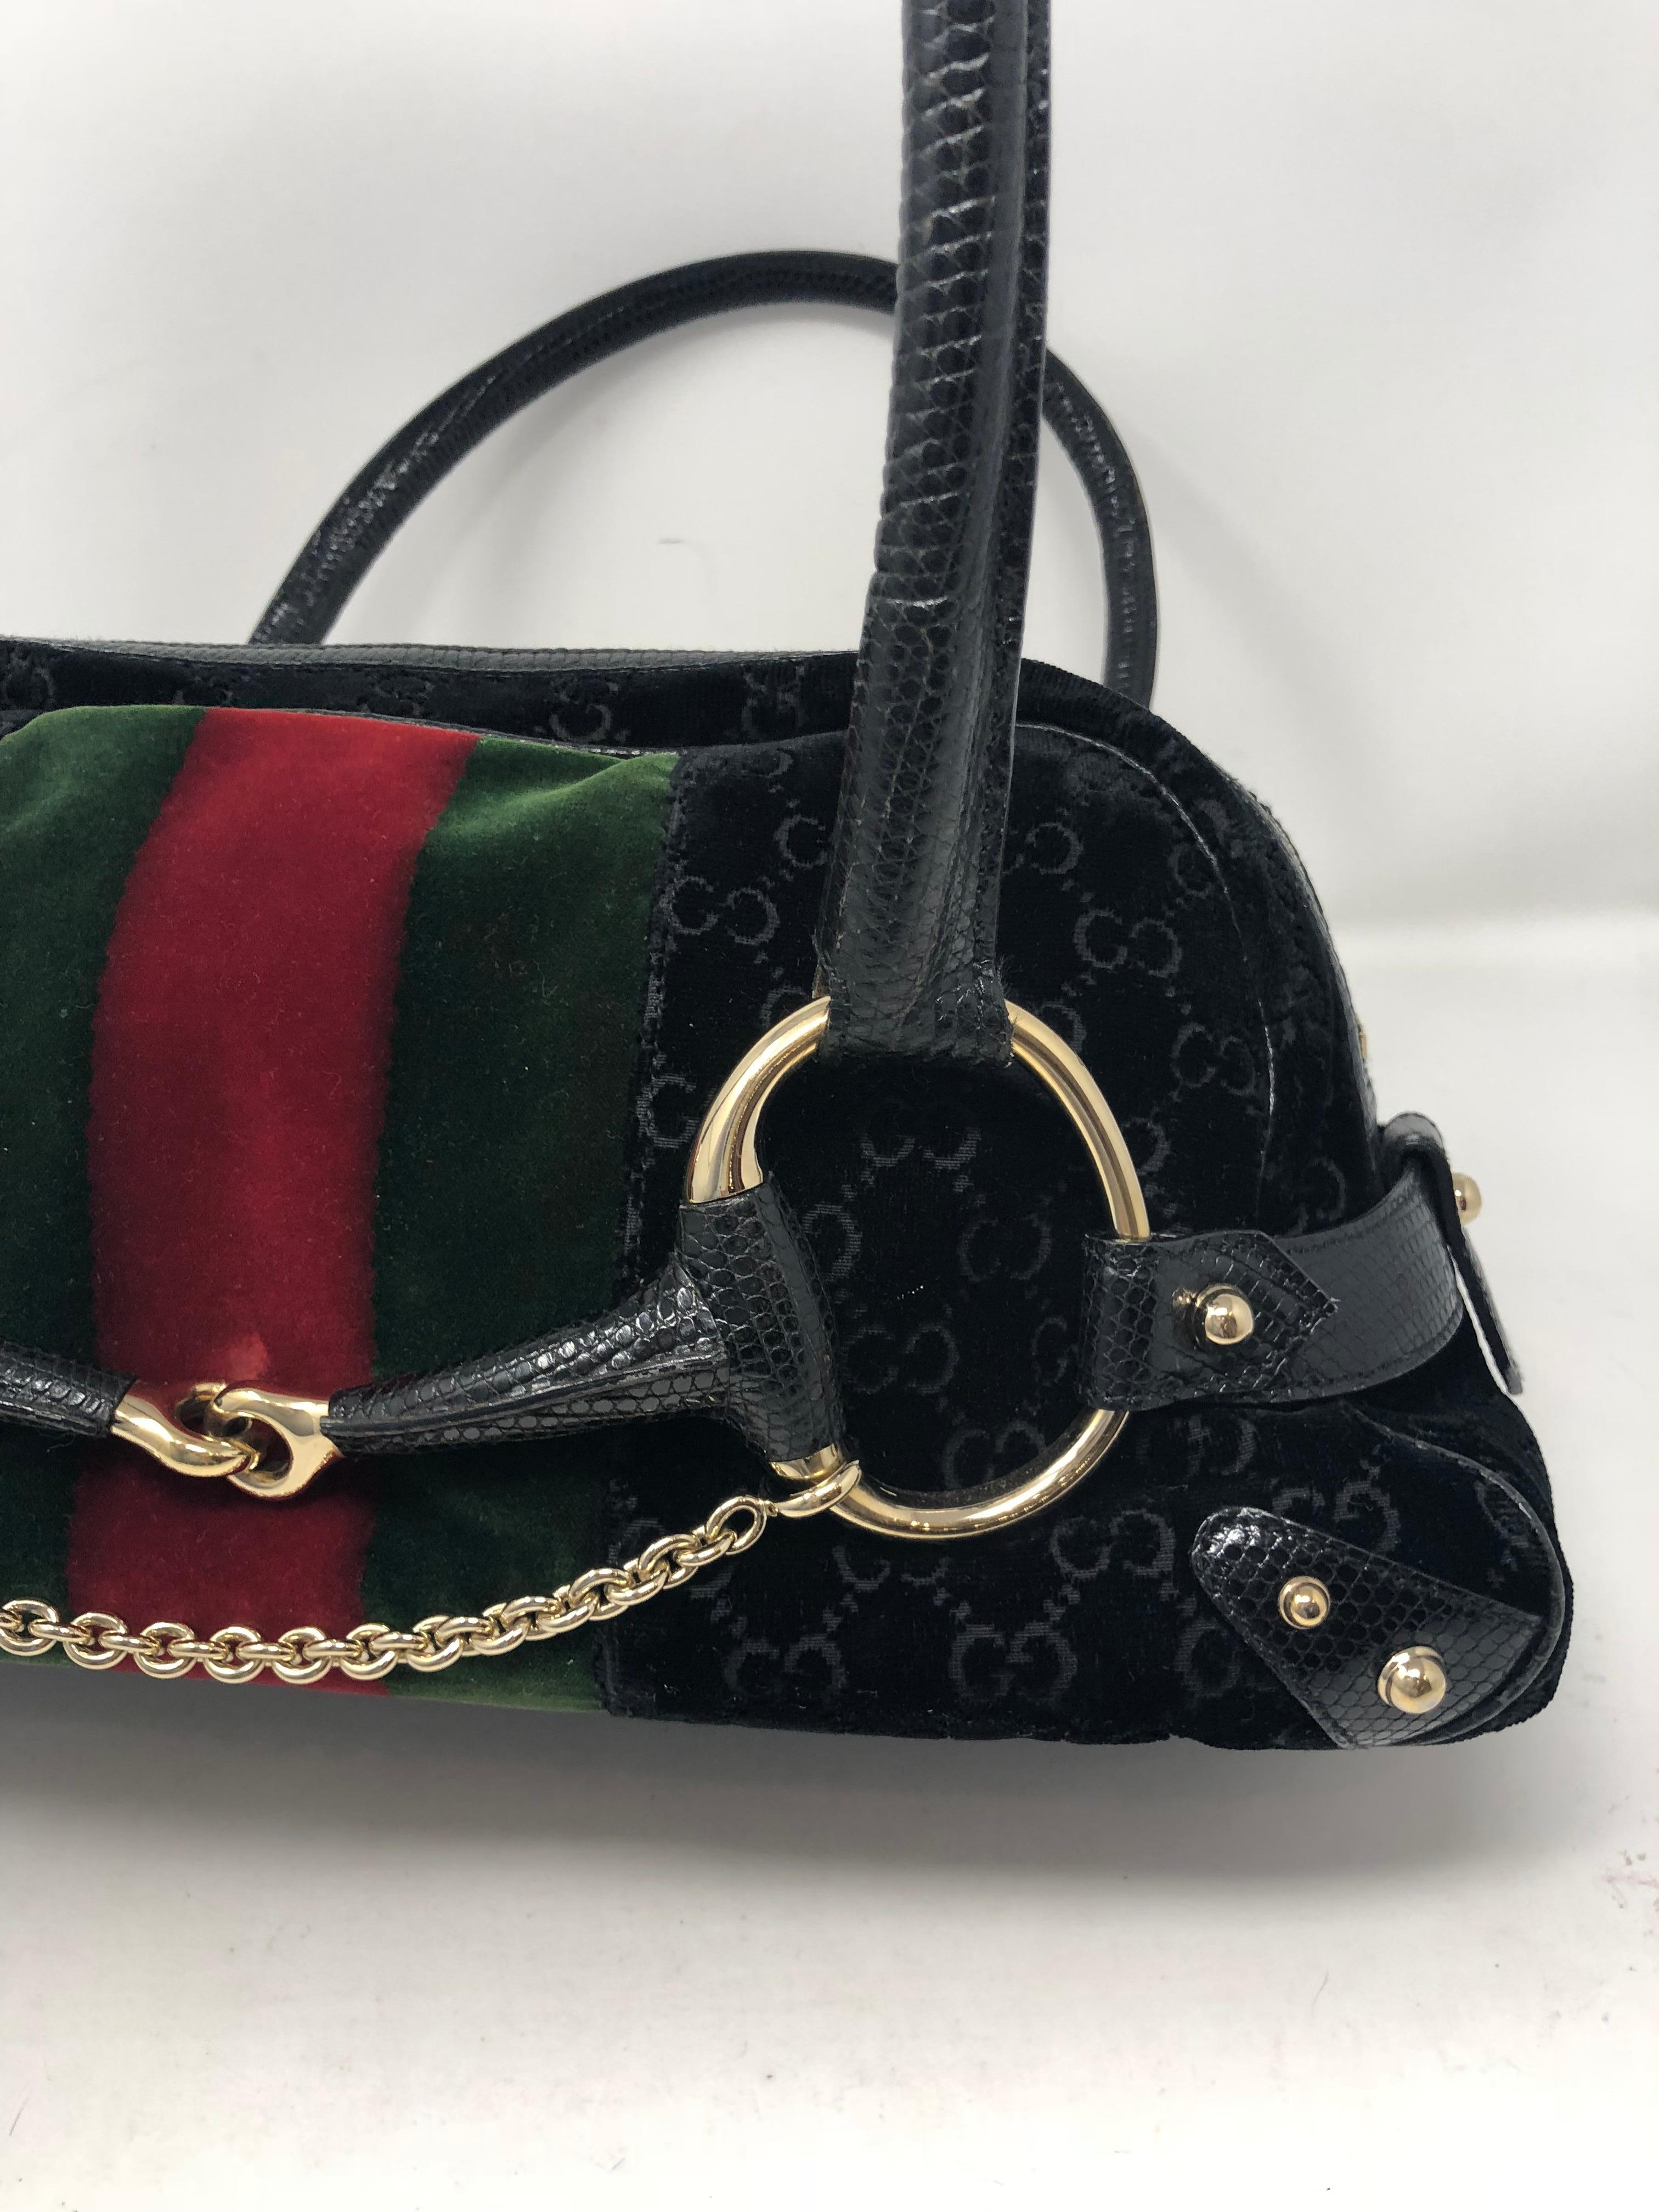 gucci limited edition handbags